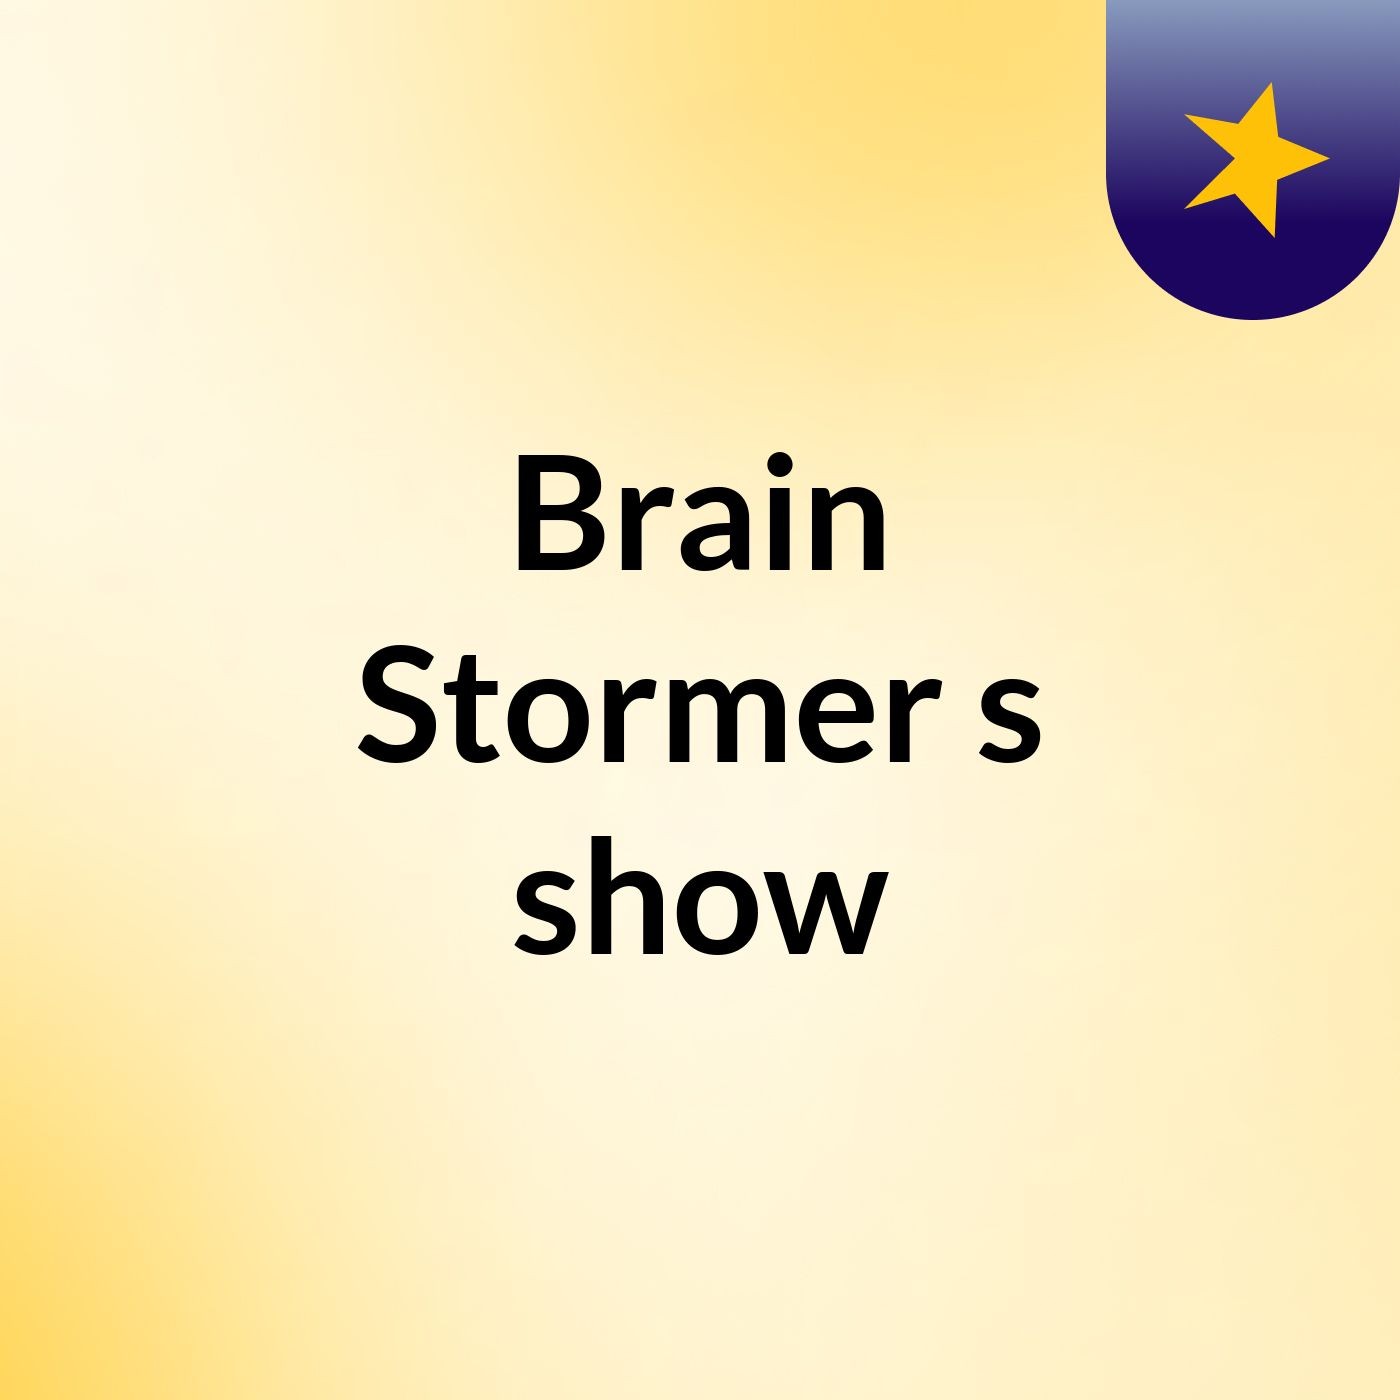 Episode 2 - Brain Stormer's show